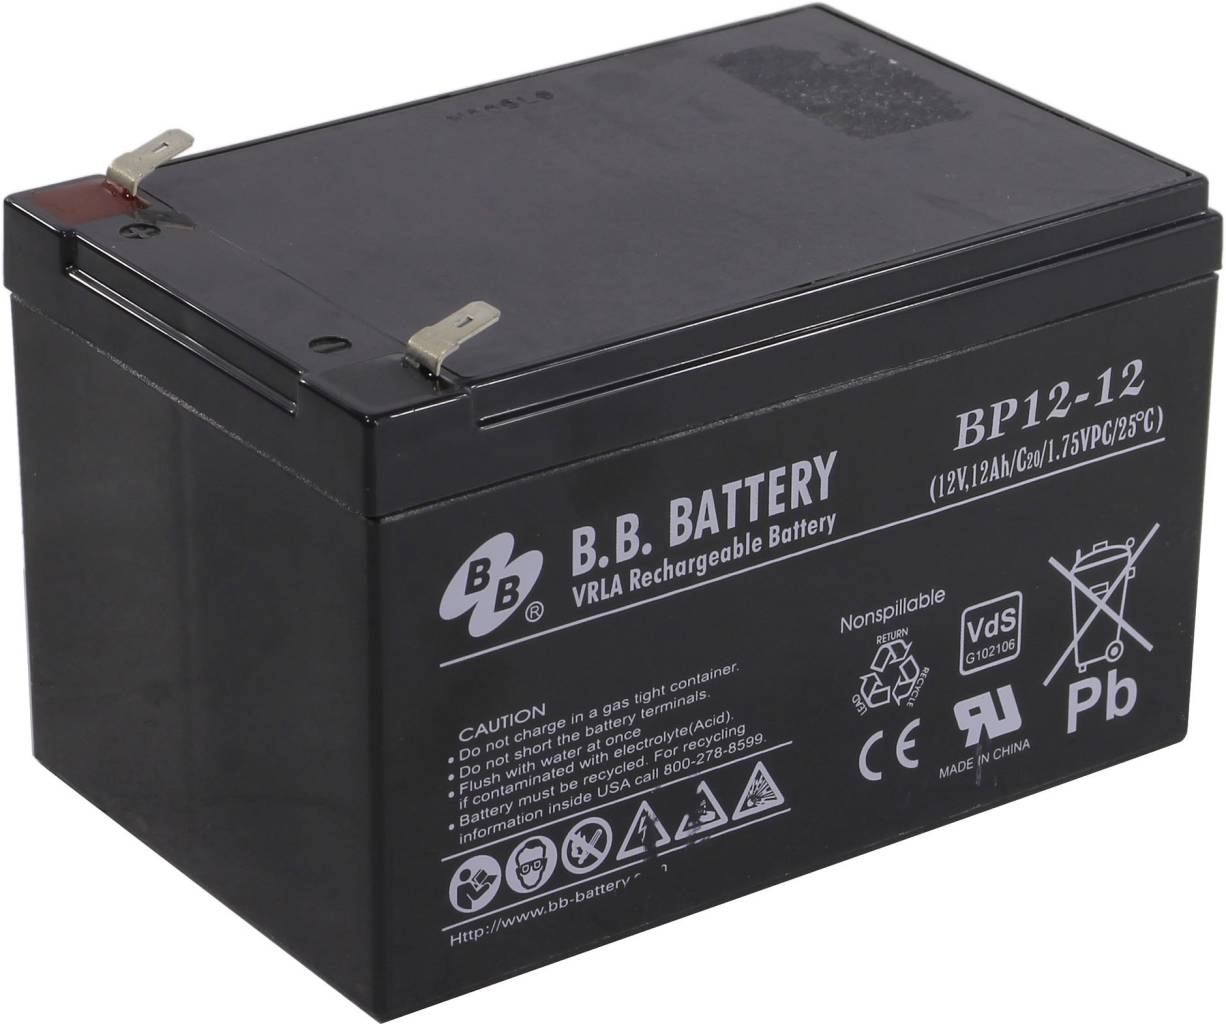   12v   12Ah B.B. Battery BP12-12  UPS